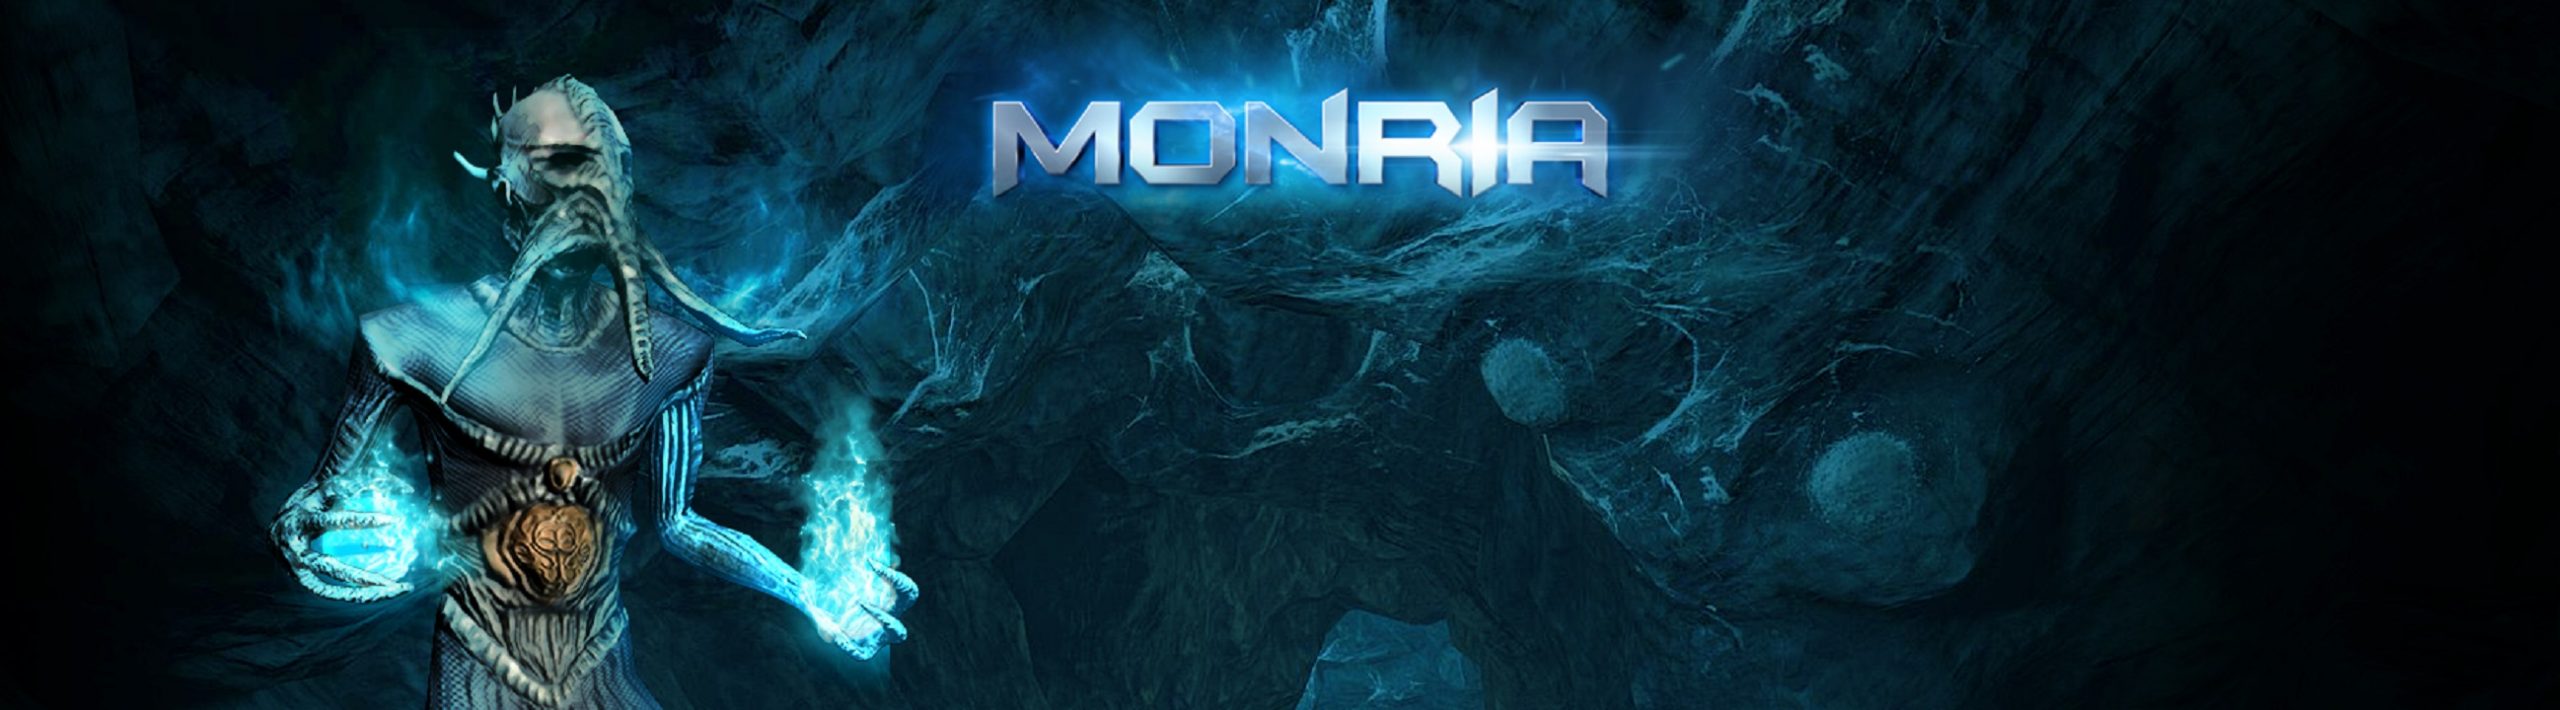 monria-banner-720H